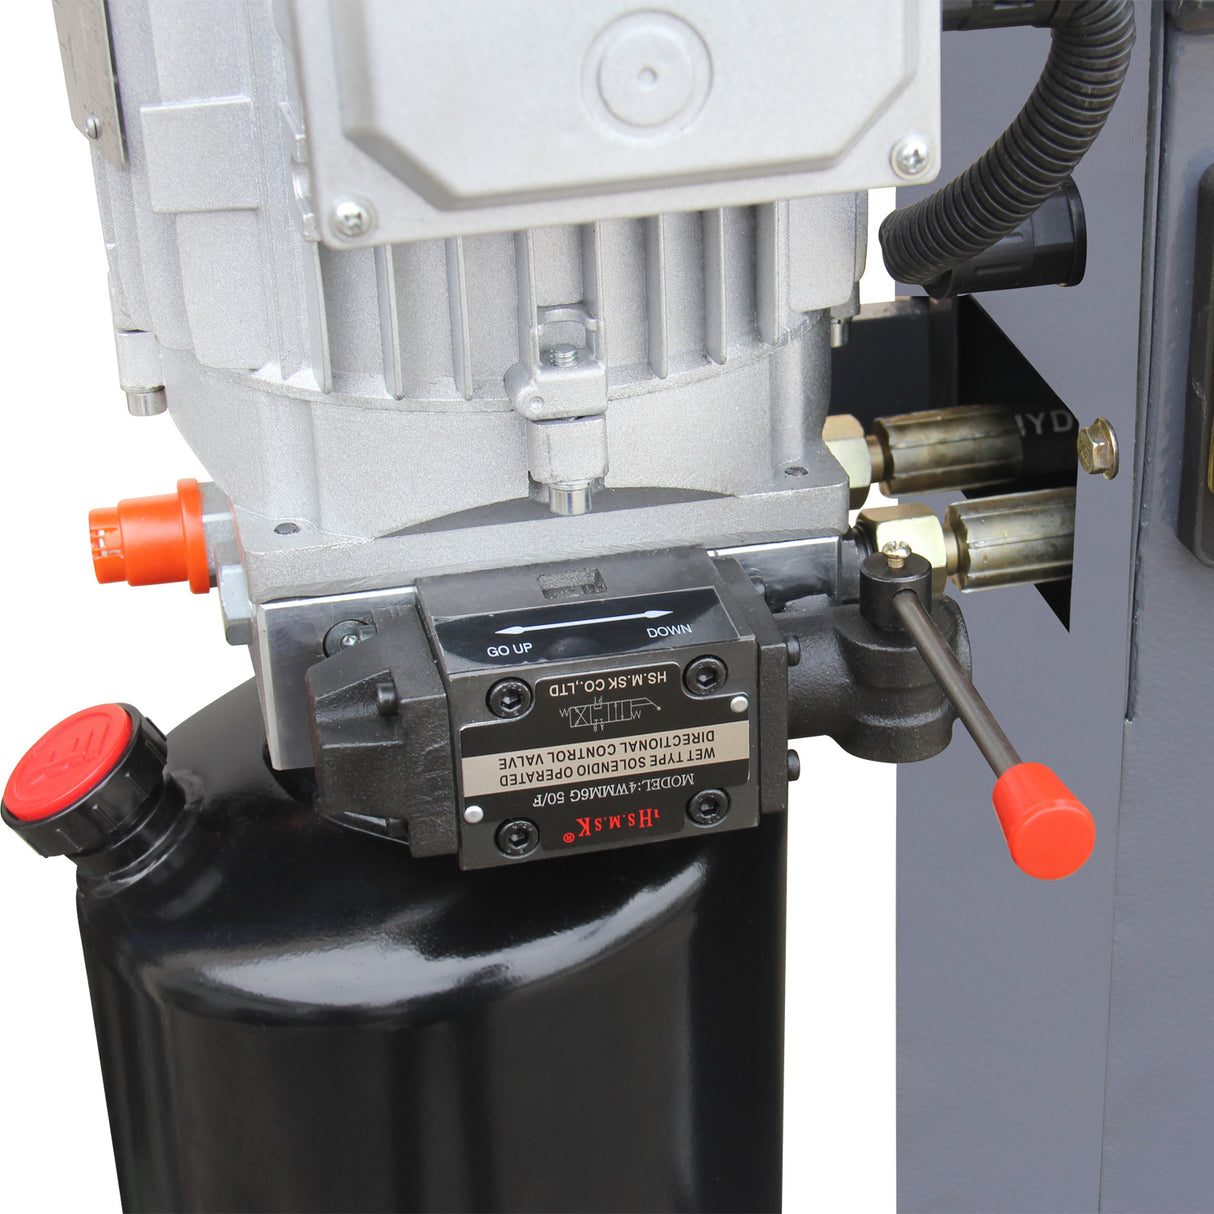 KAKA INDUSTRIAL HP-50 Electric Hydraulic Press，Hydraulic Electric Pump, H-Frame Shop Press with Gear pump,50 ton Frame Capacity, 8.6 in Stroke 220V Single phase